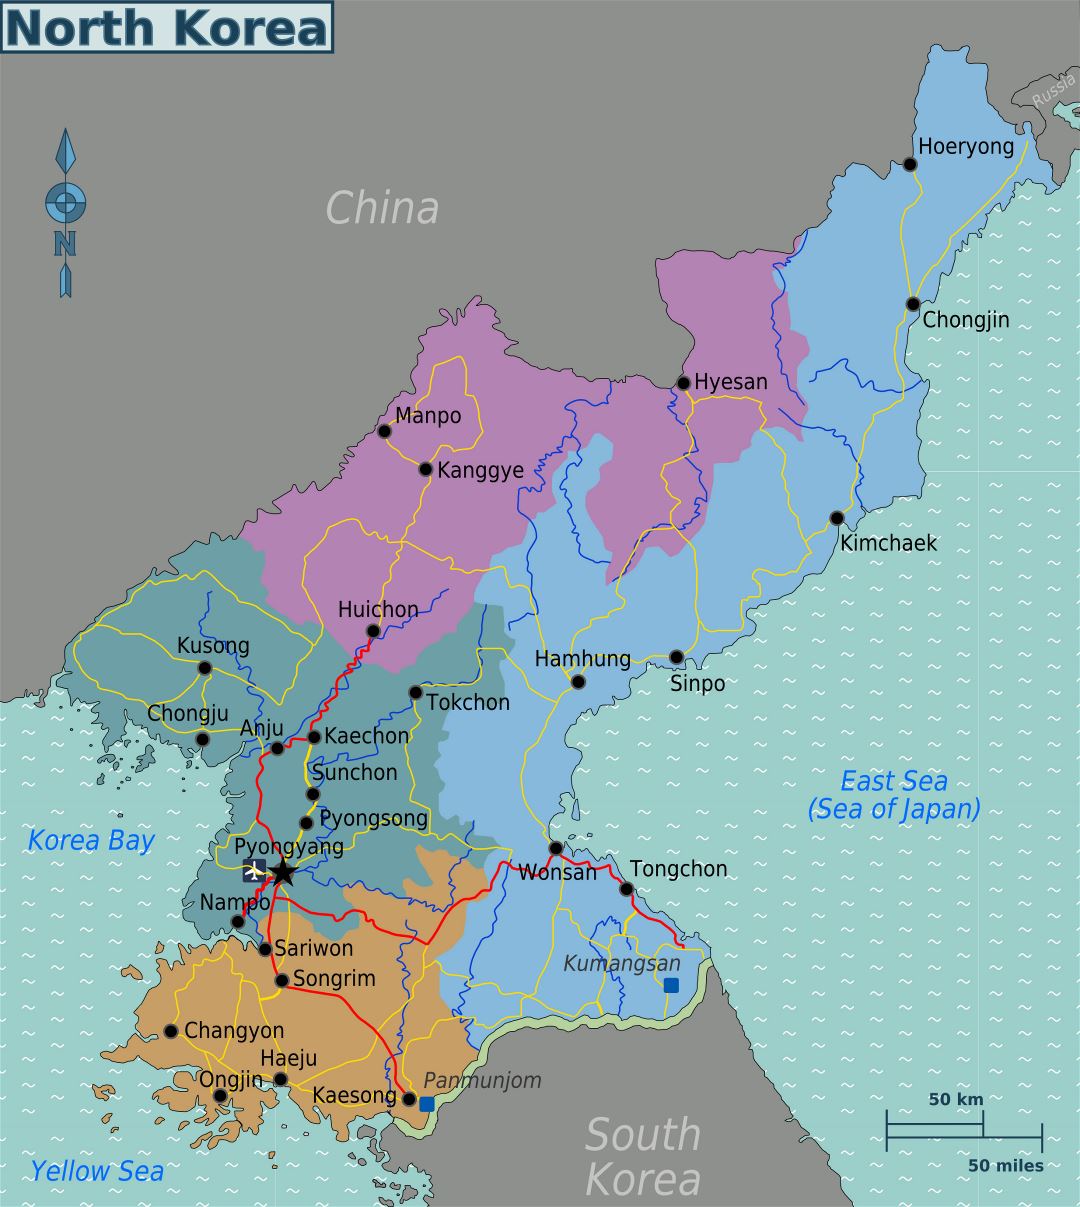 Large regions map of North Korea